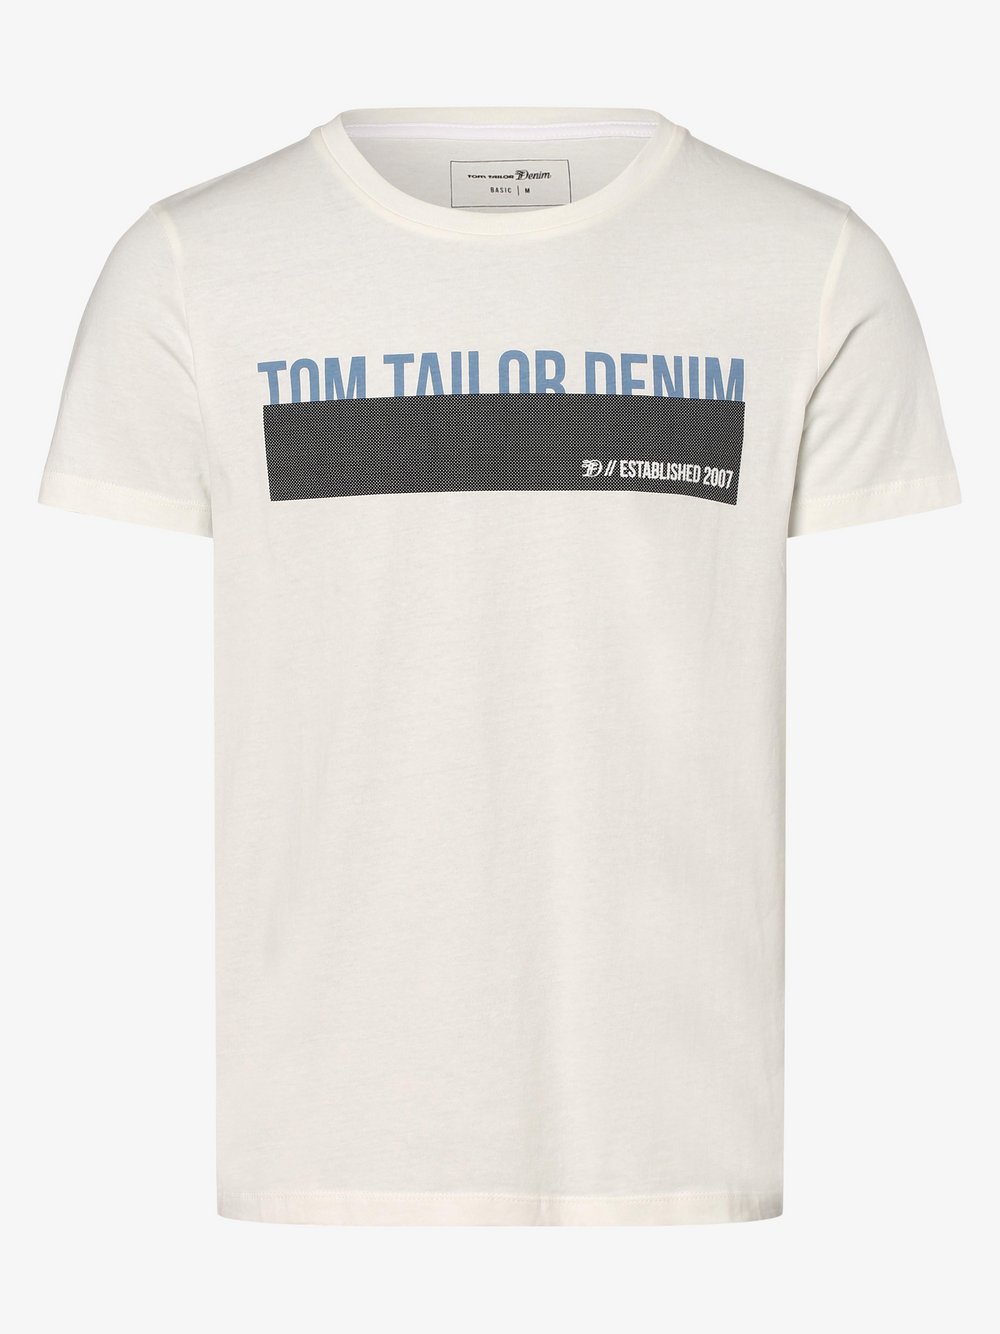 Tom Tailor Denim - T-shirt męski, biały